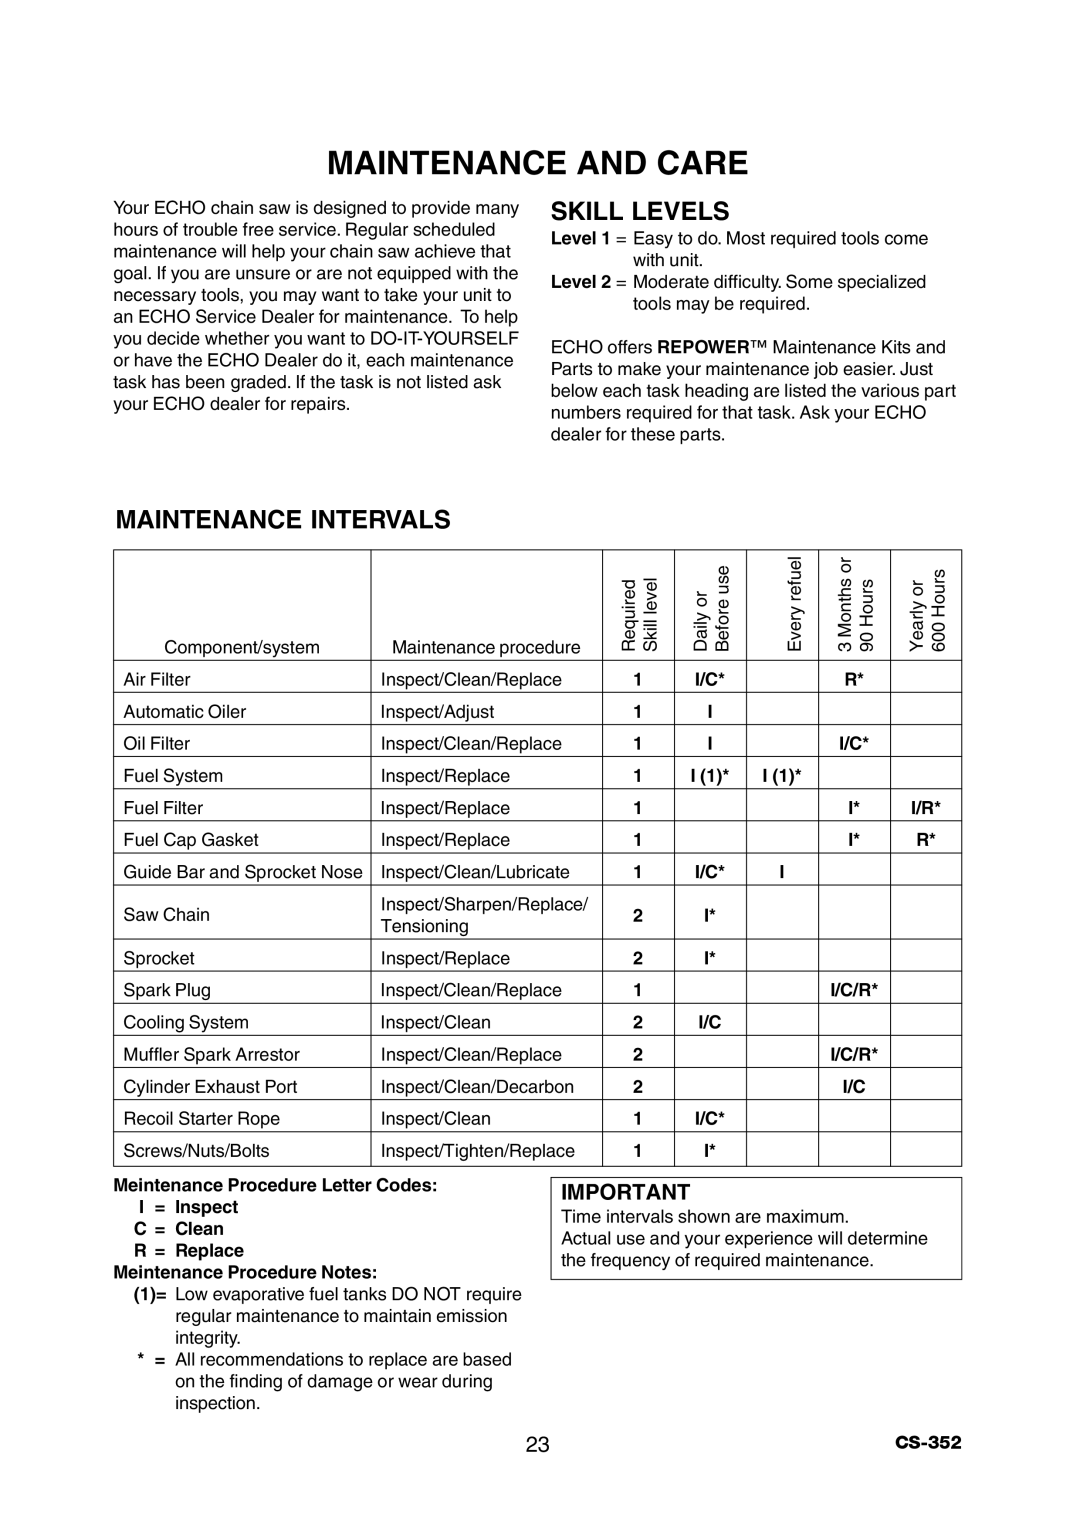 Echo CS-352 instruction manual Maintenance And Care, Skill Levels, Maintenance Intervals 